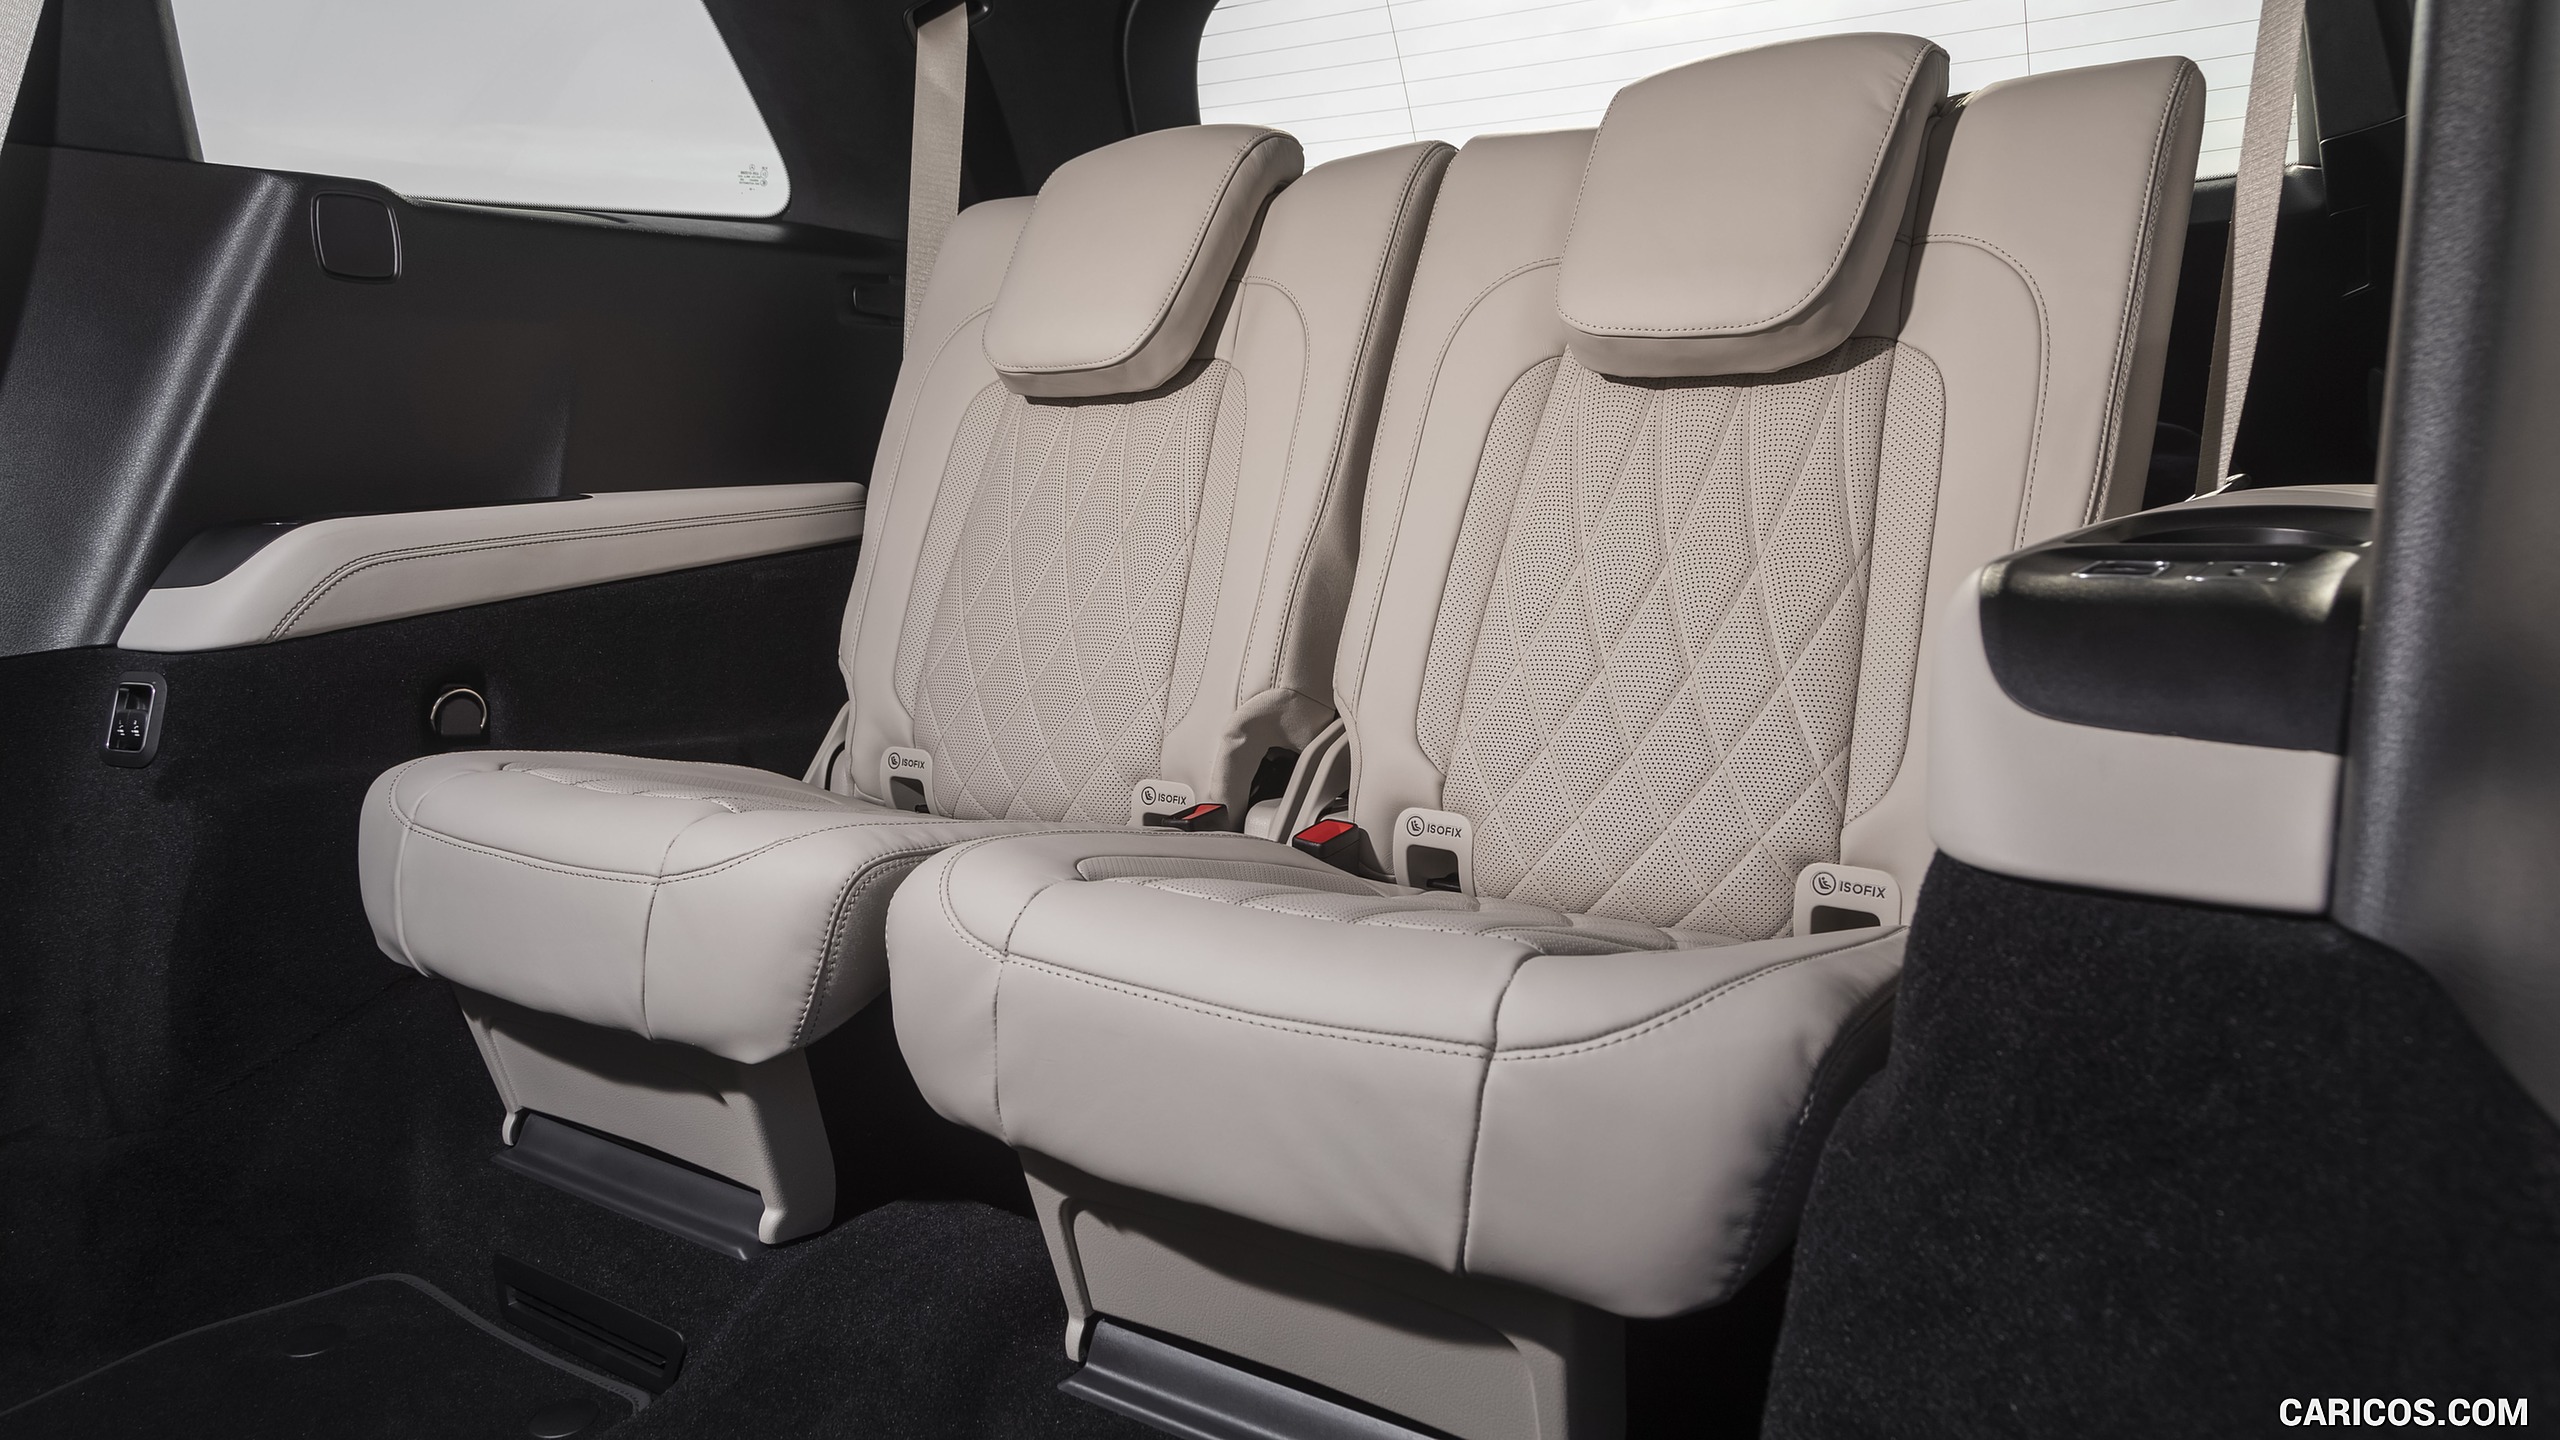 2021 Mercedes-AMG GLS 63 (US-Spec) - Interior, Third Row Seats, #82 of 95